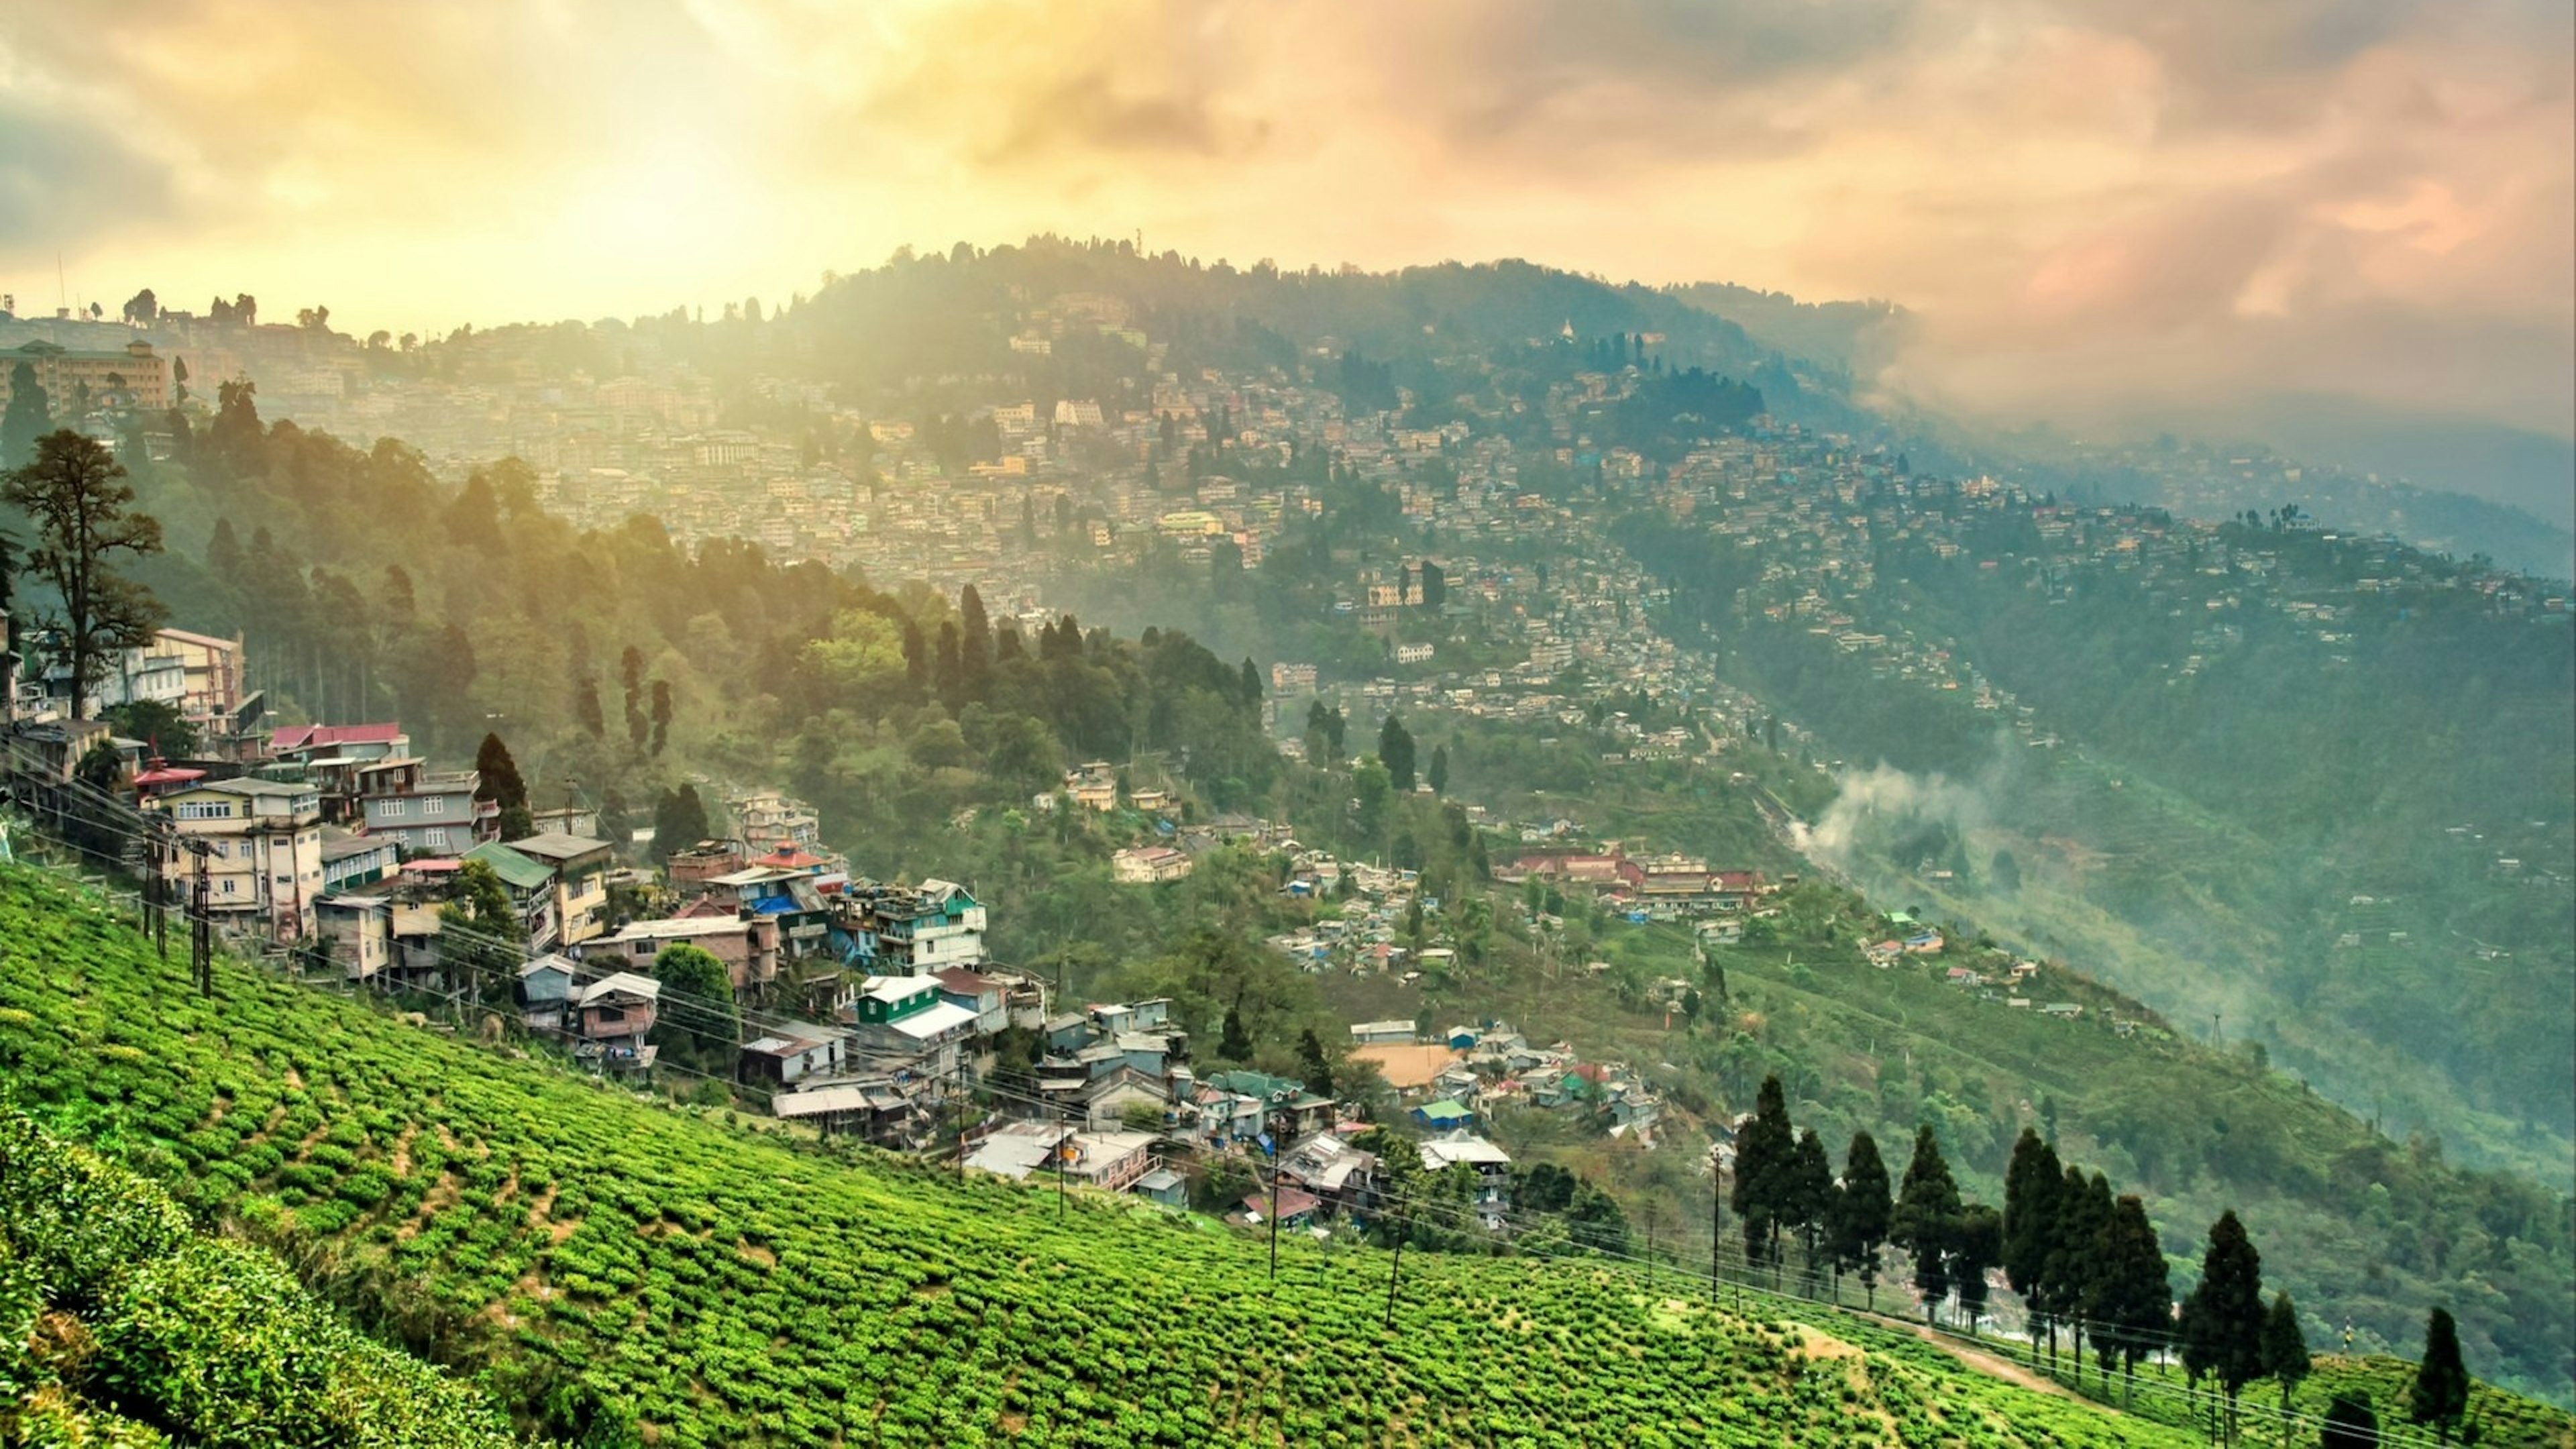 Tea plantations in Darjeeling, West Bengal, India